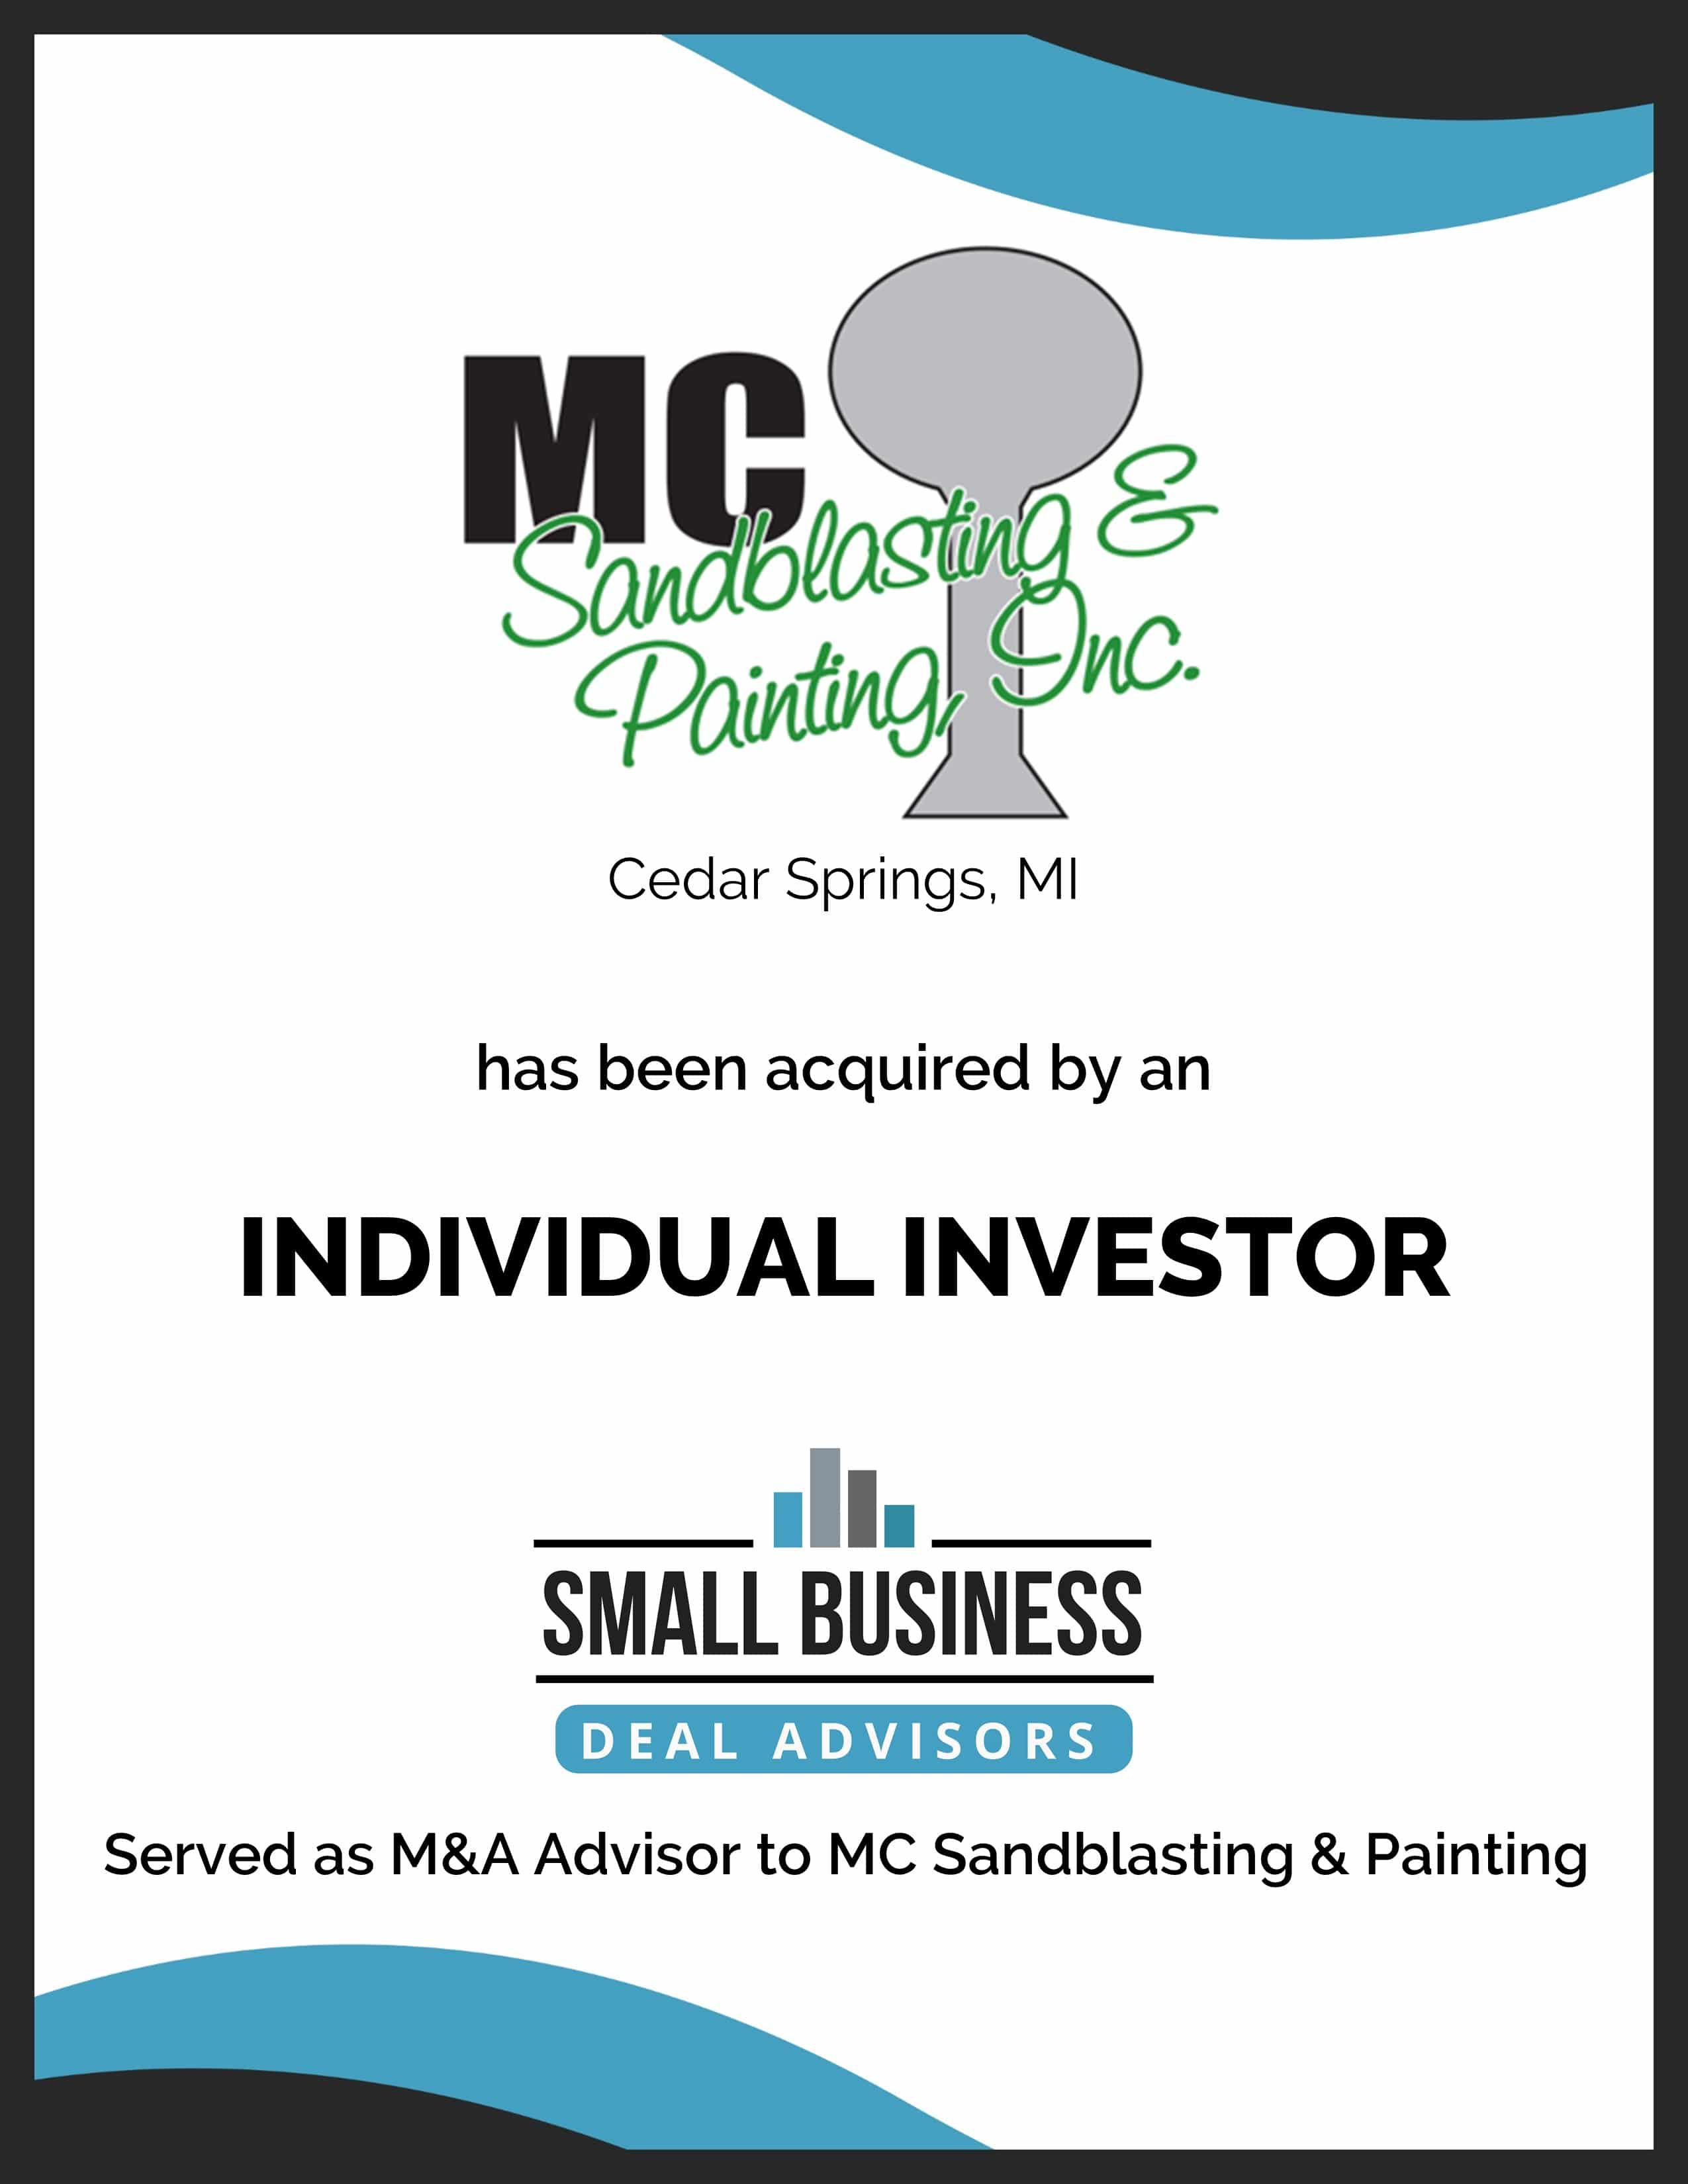 MC Sandblasting & Painting Sold to an Individual Investor